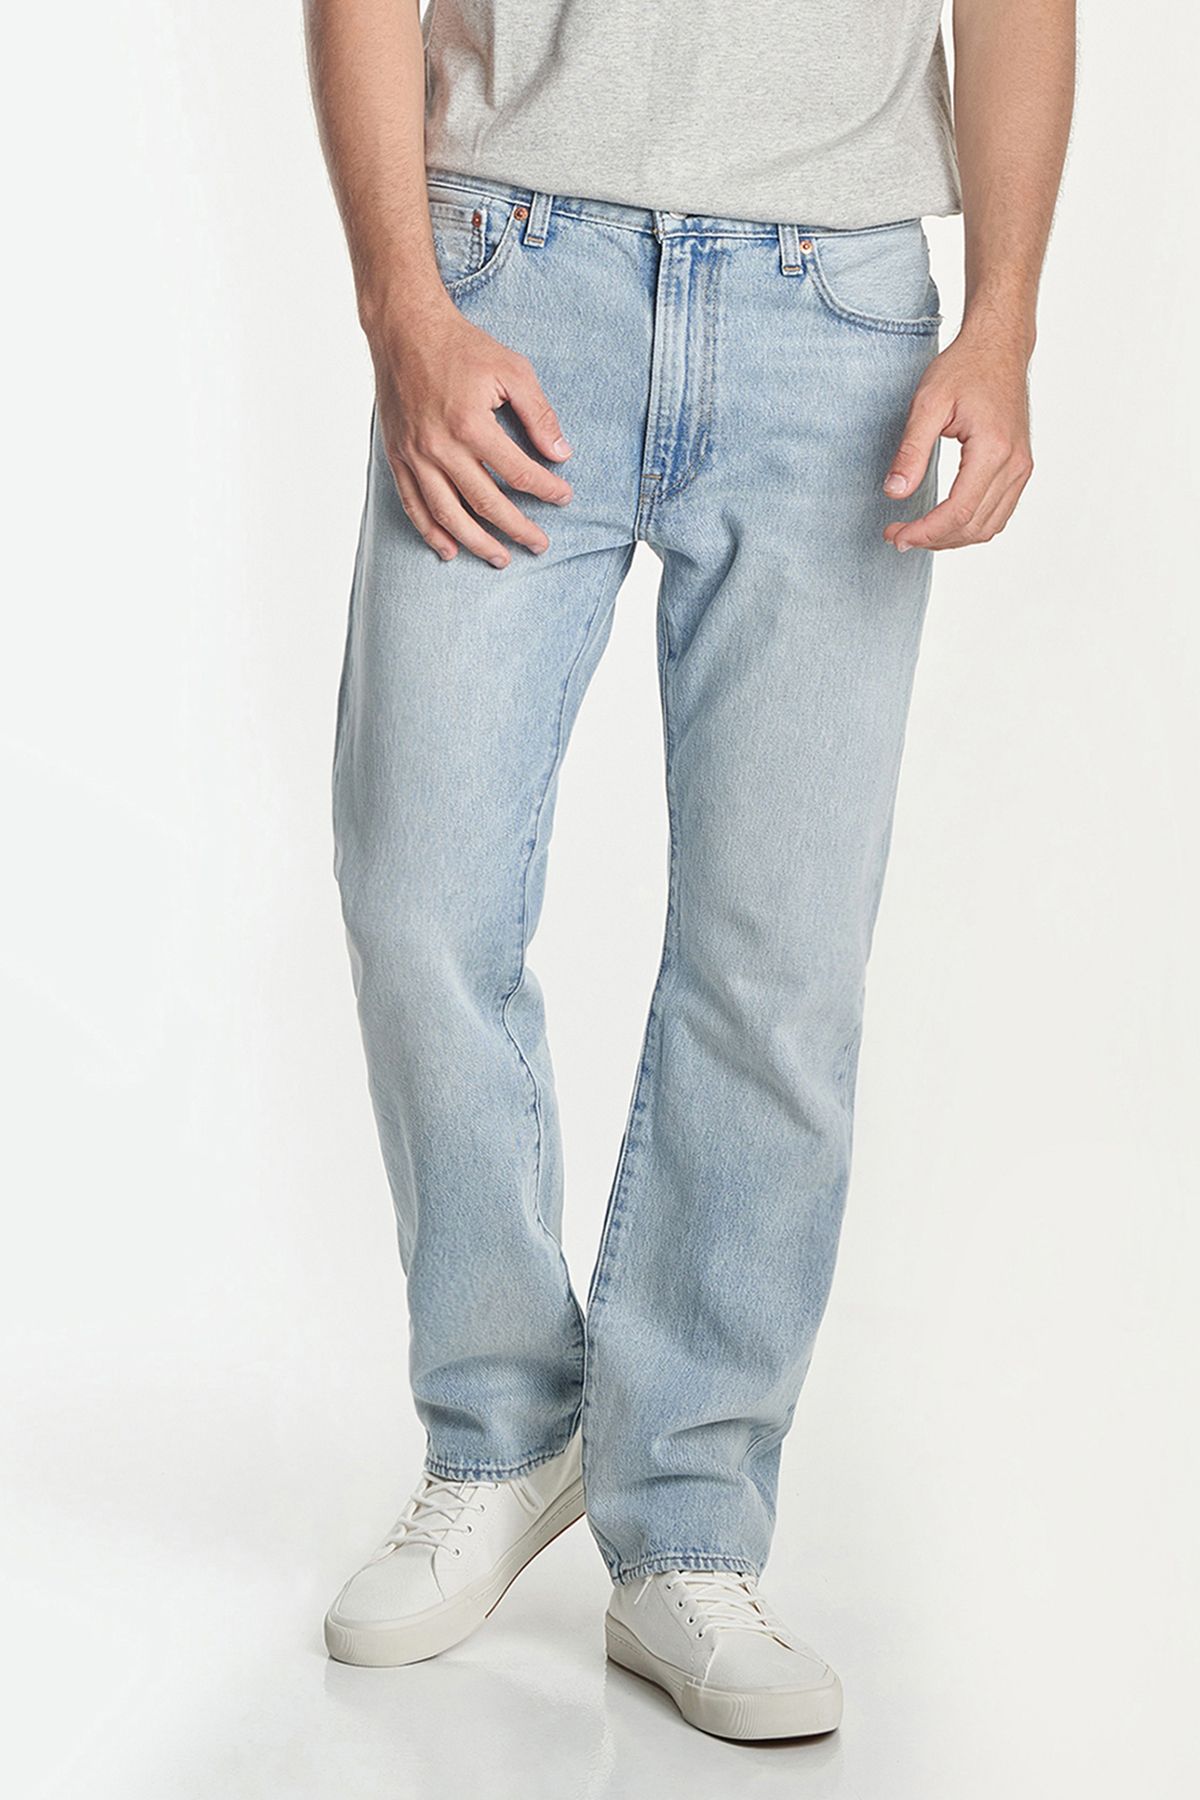 Levi's Â® 551Z Authentic Straight Tuner Men Jeans|akgalleria.com